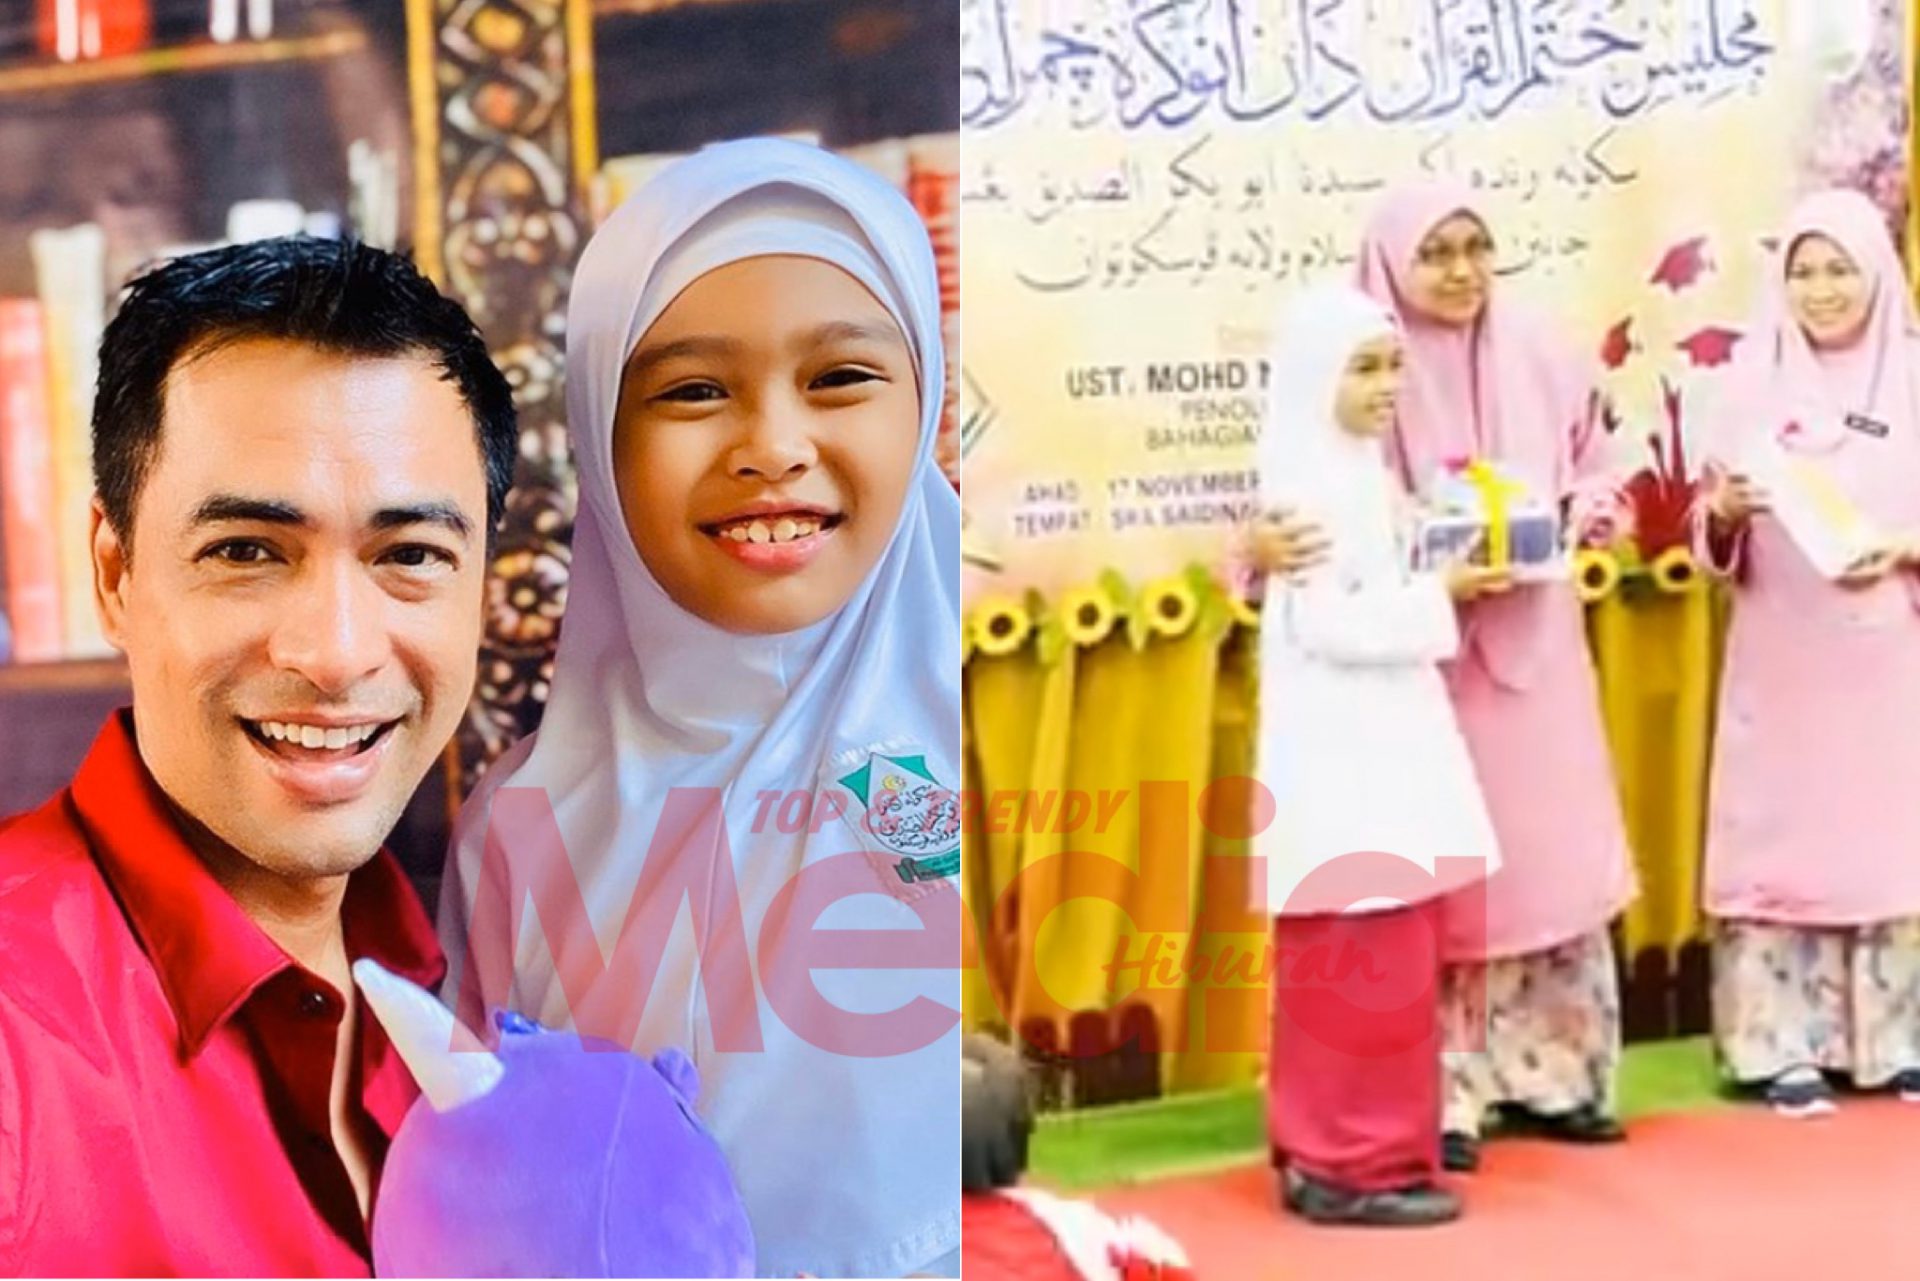 “Only 5 Awards For This Year,” – Anak Dapat Nombor 1 Sejak Sekolah, Dr Sheikh Muszaphar Kongsi Tips